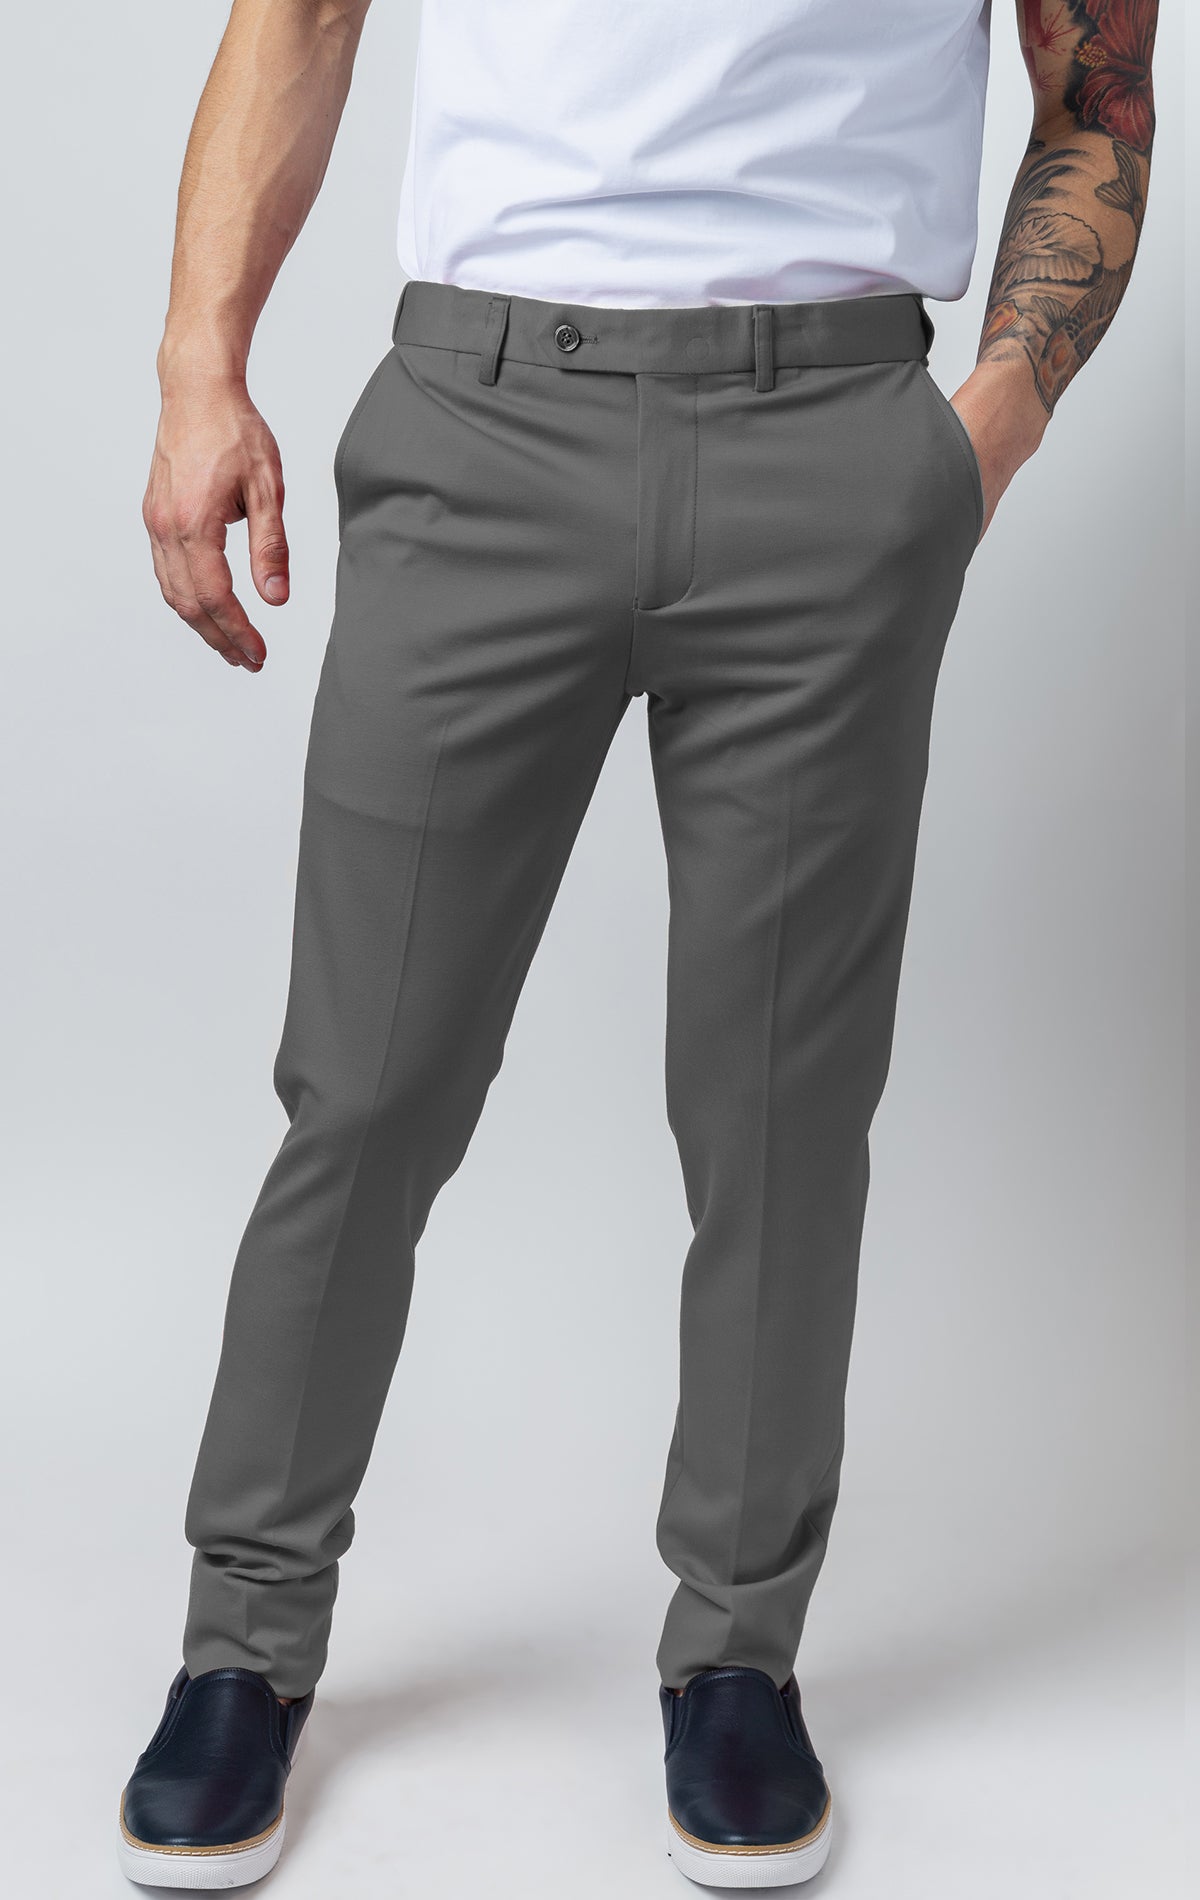 Gray casual/formal pants for men